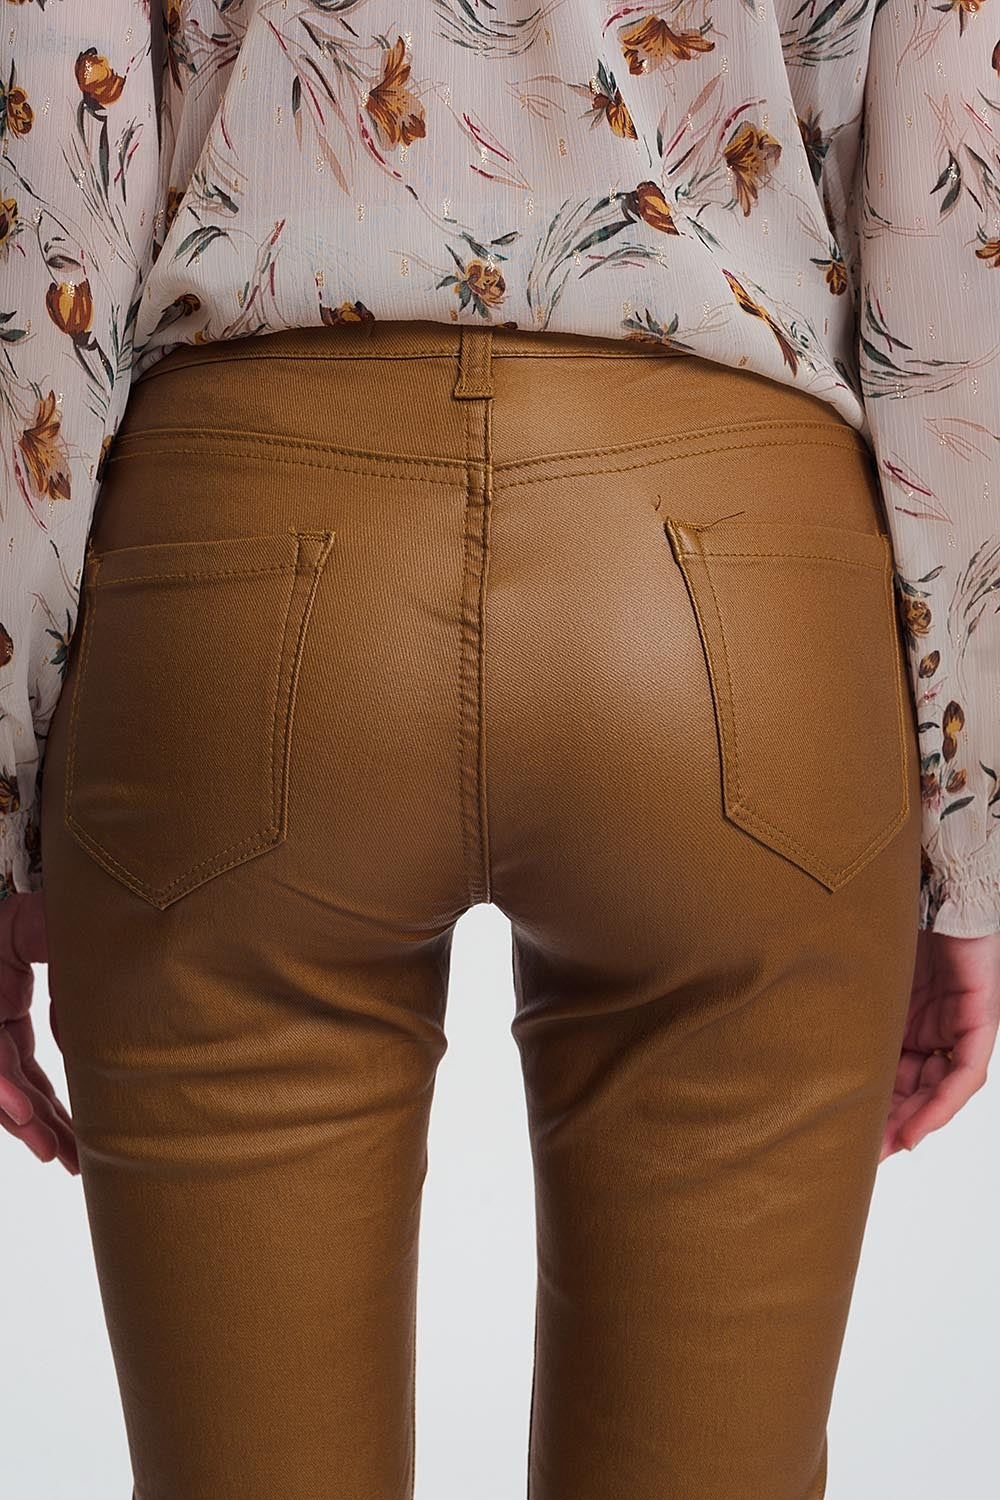 coated skinny pants in camel Szua Store